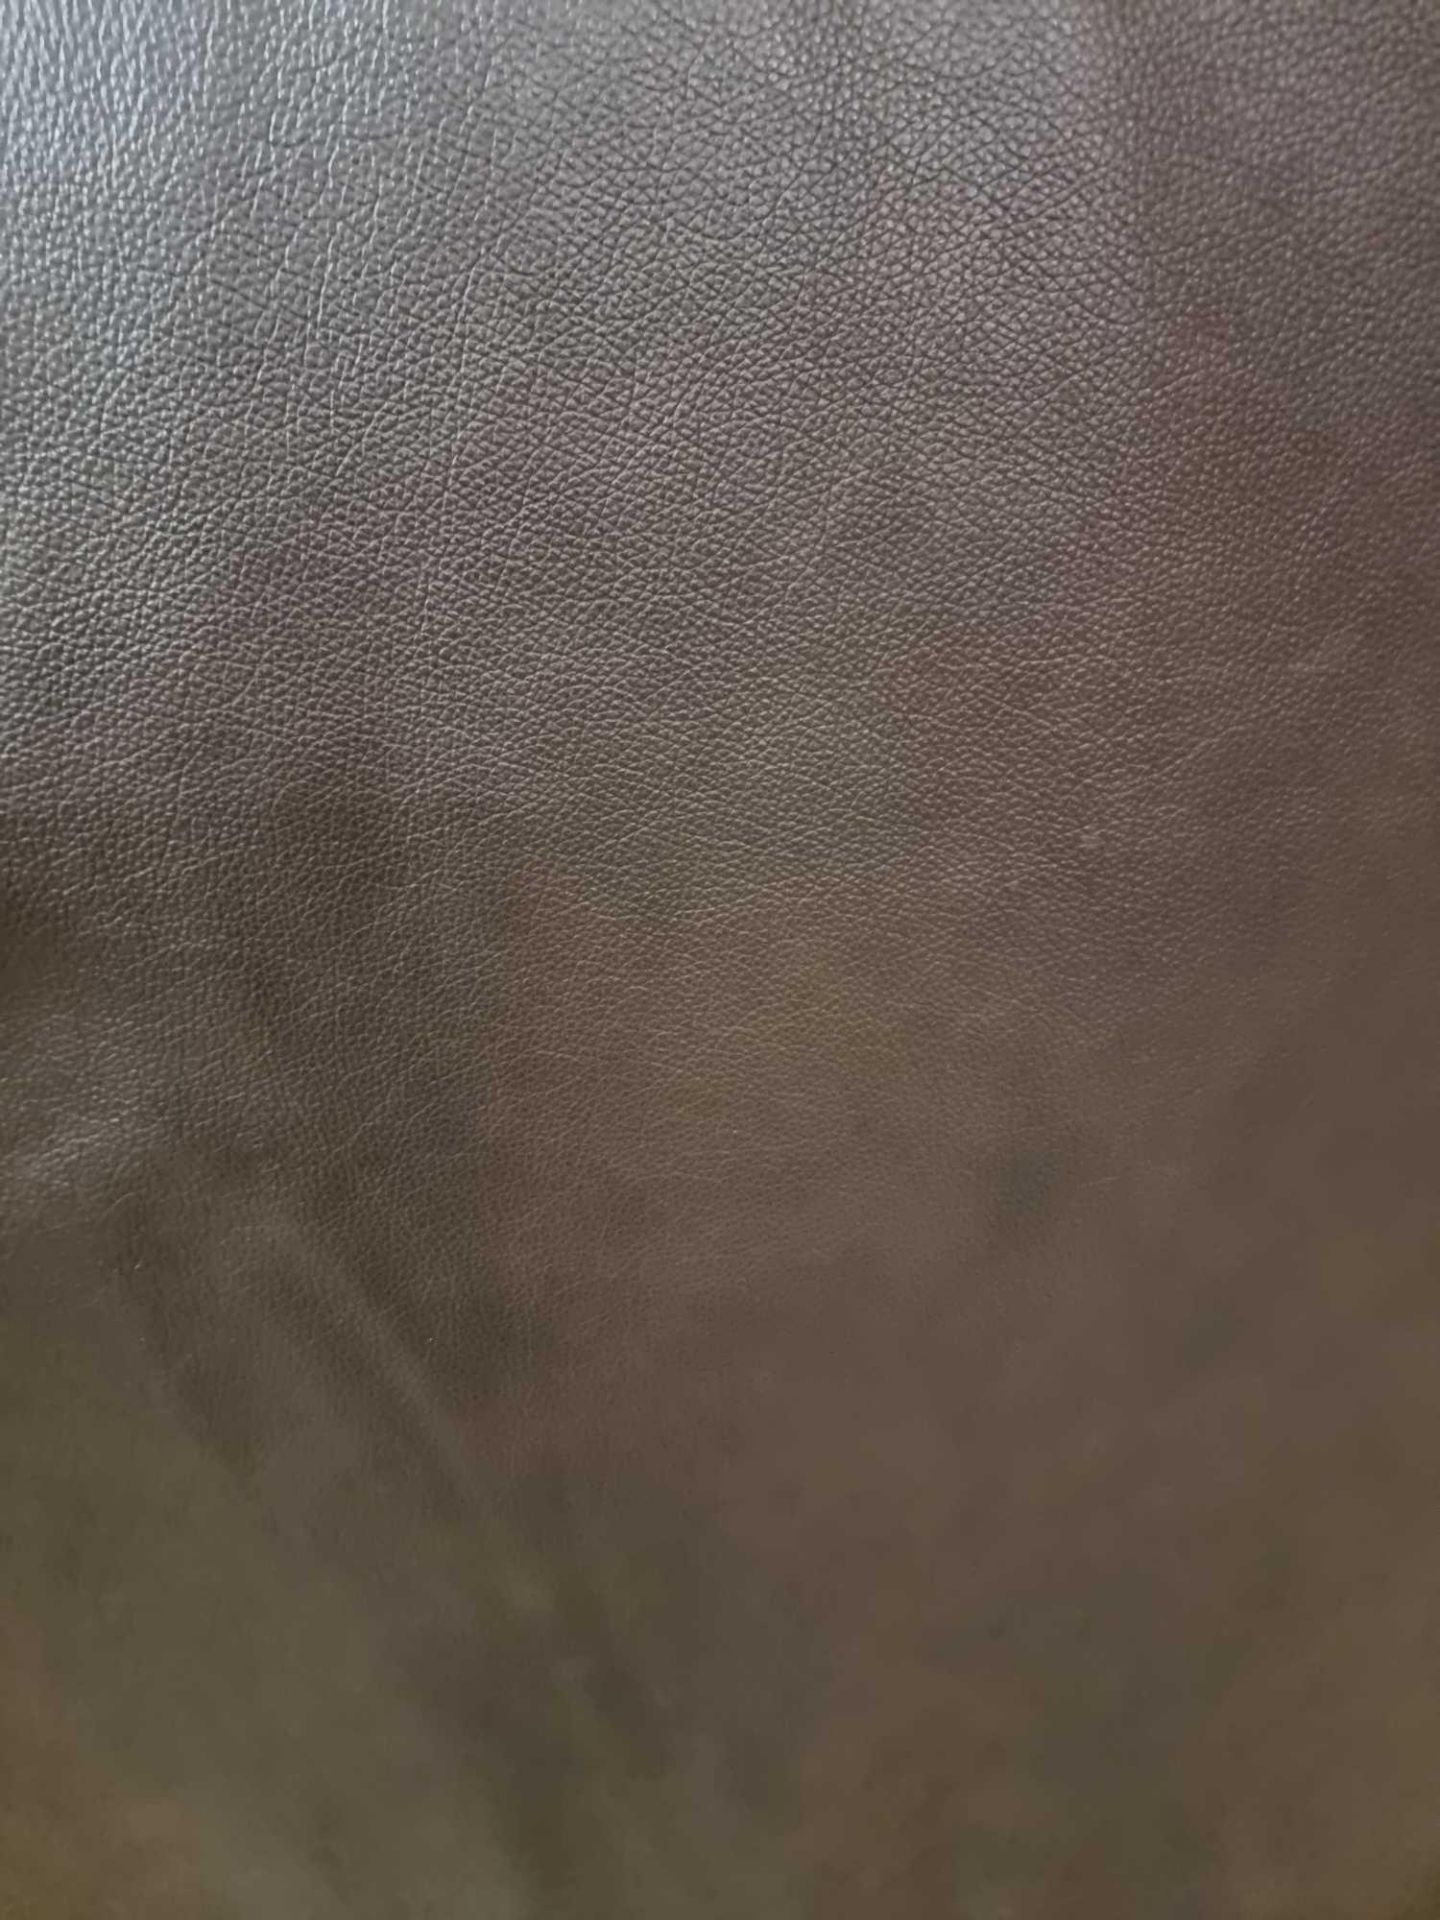 Mastrotto Hudson Chocolate Leather Hide approximately 5mÂ² 2.5 x 2cm ( Hide No,70) - Bild 2 aus 3